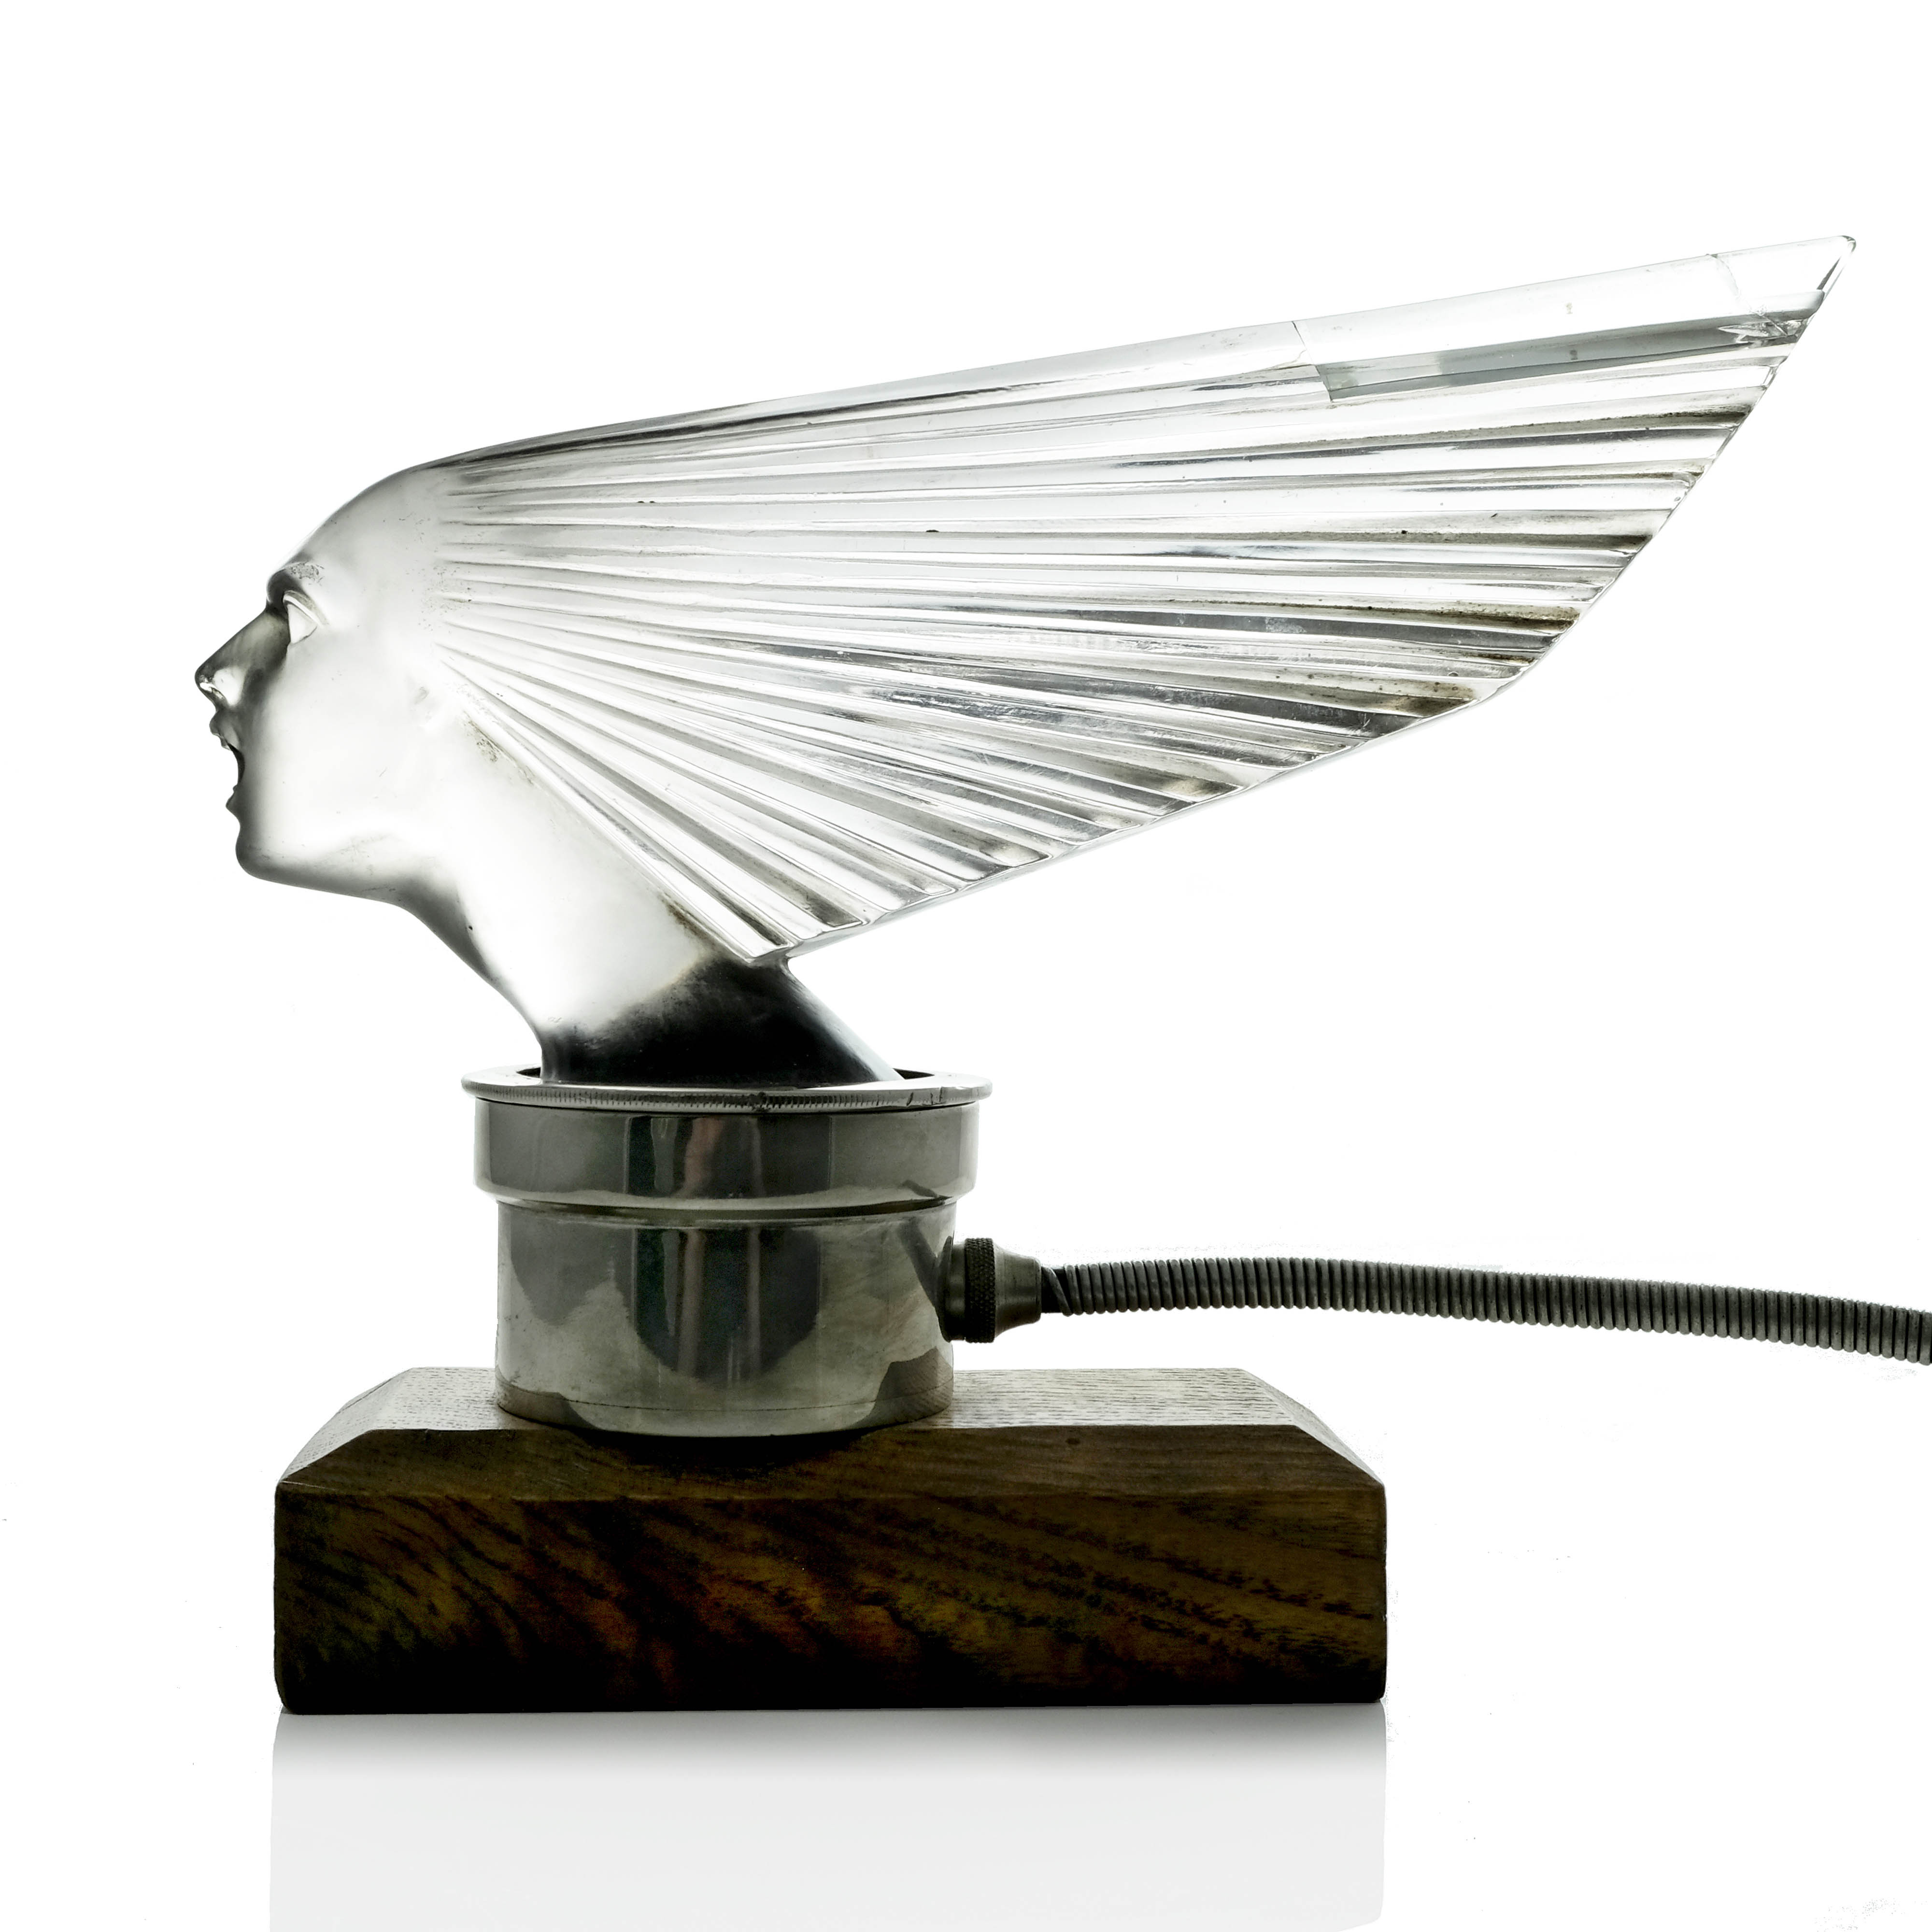 Rene Lalique, a Victoire glass car mascot